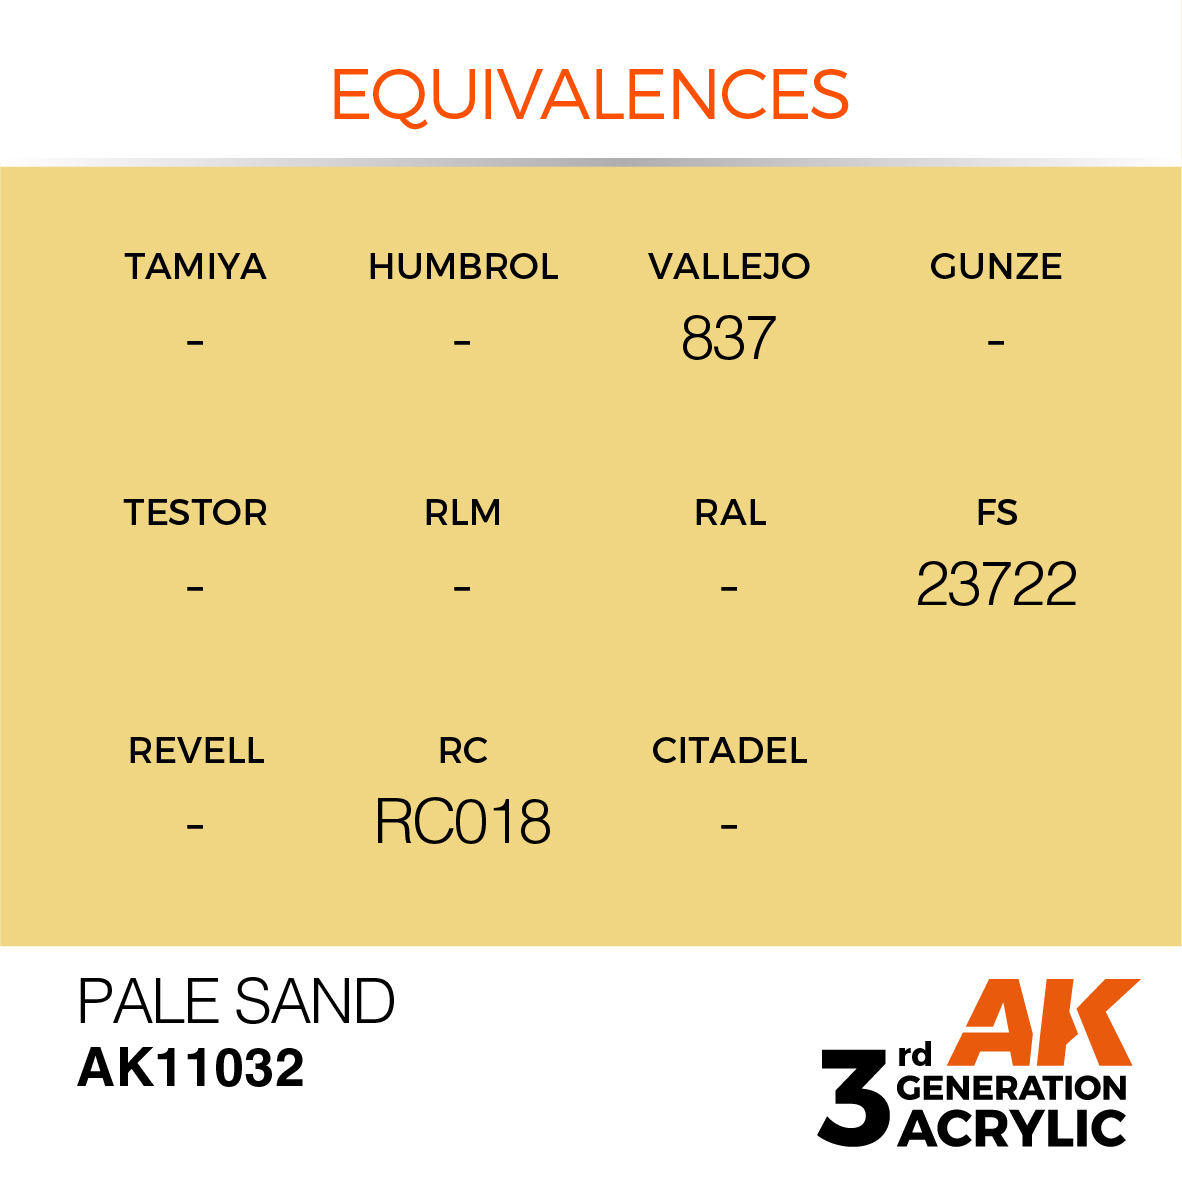 Pale Sand - Standard